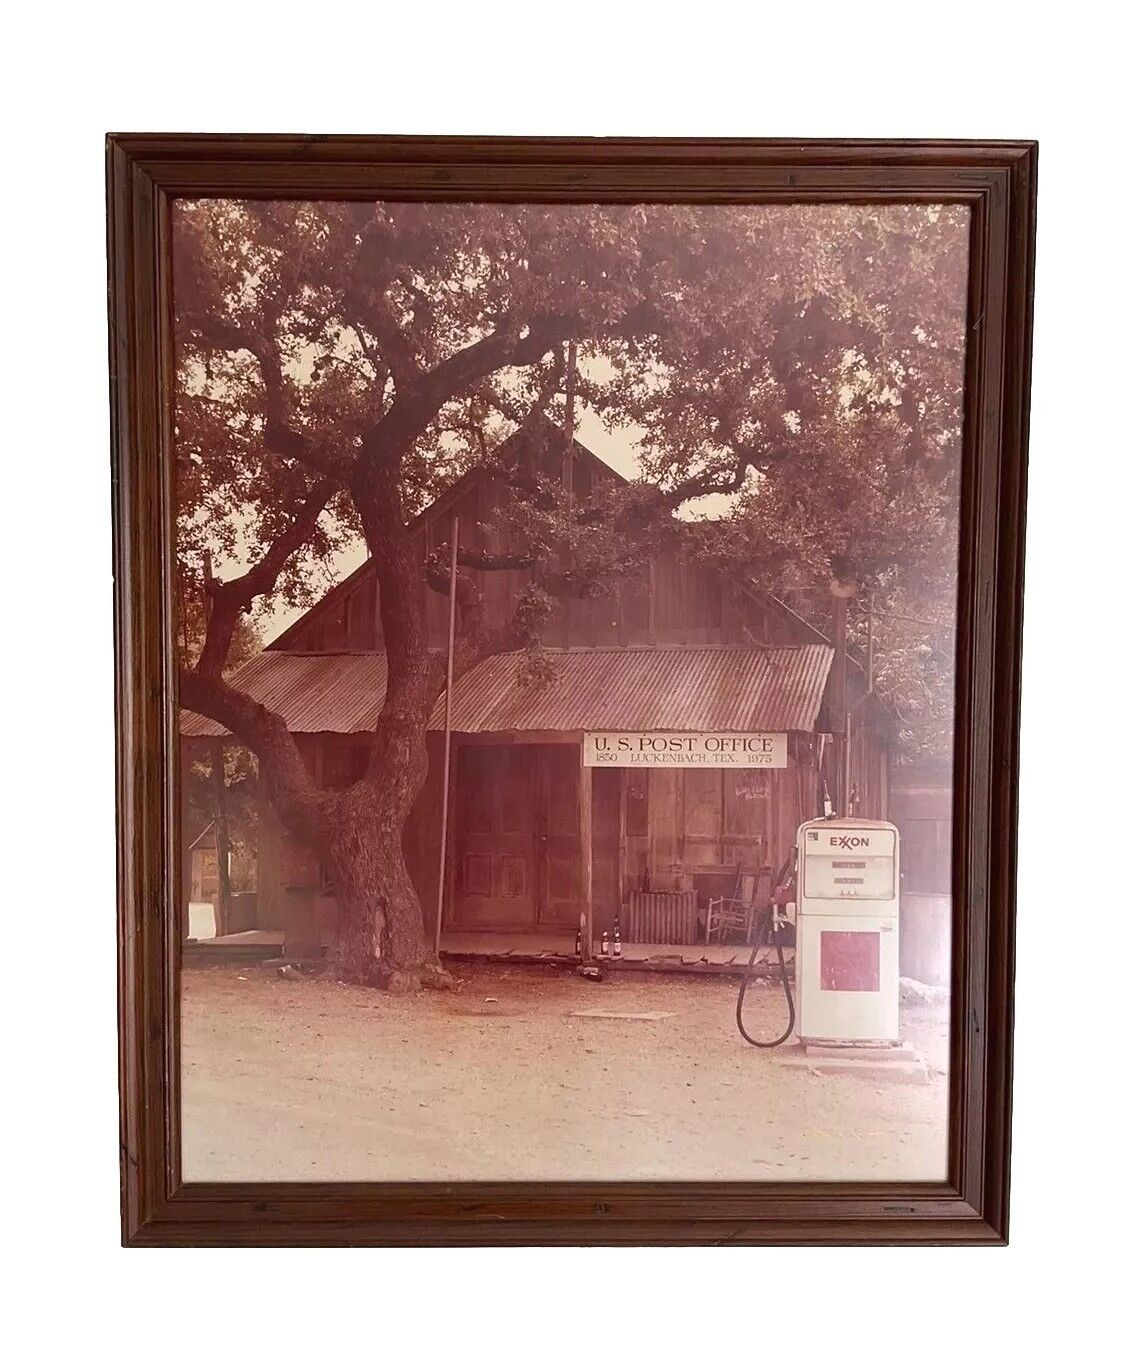 Luckenbach Texas Photograph Don K. Langson Post Office Exxon Lone Star Beer 1977